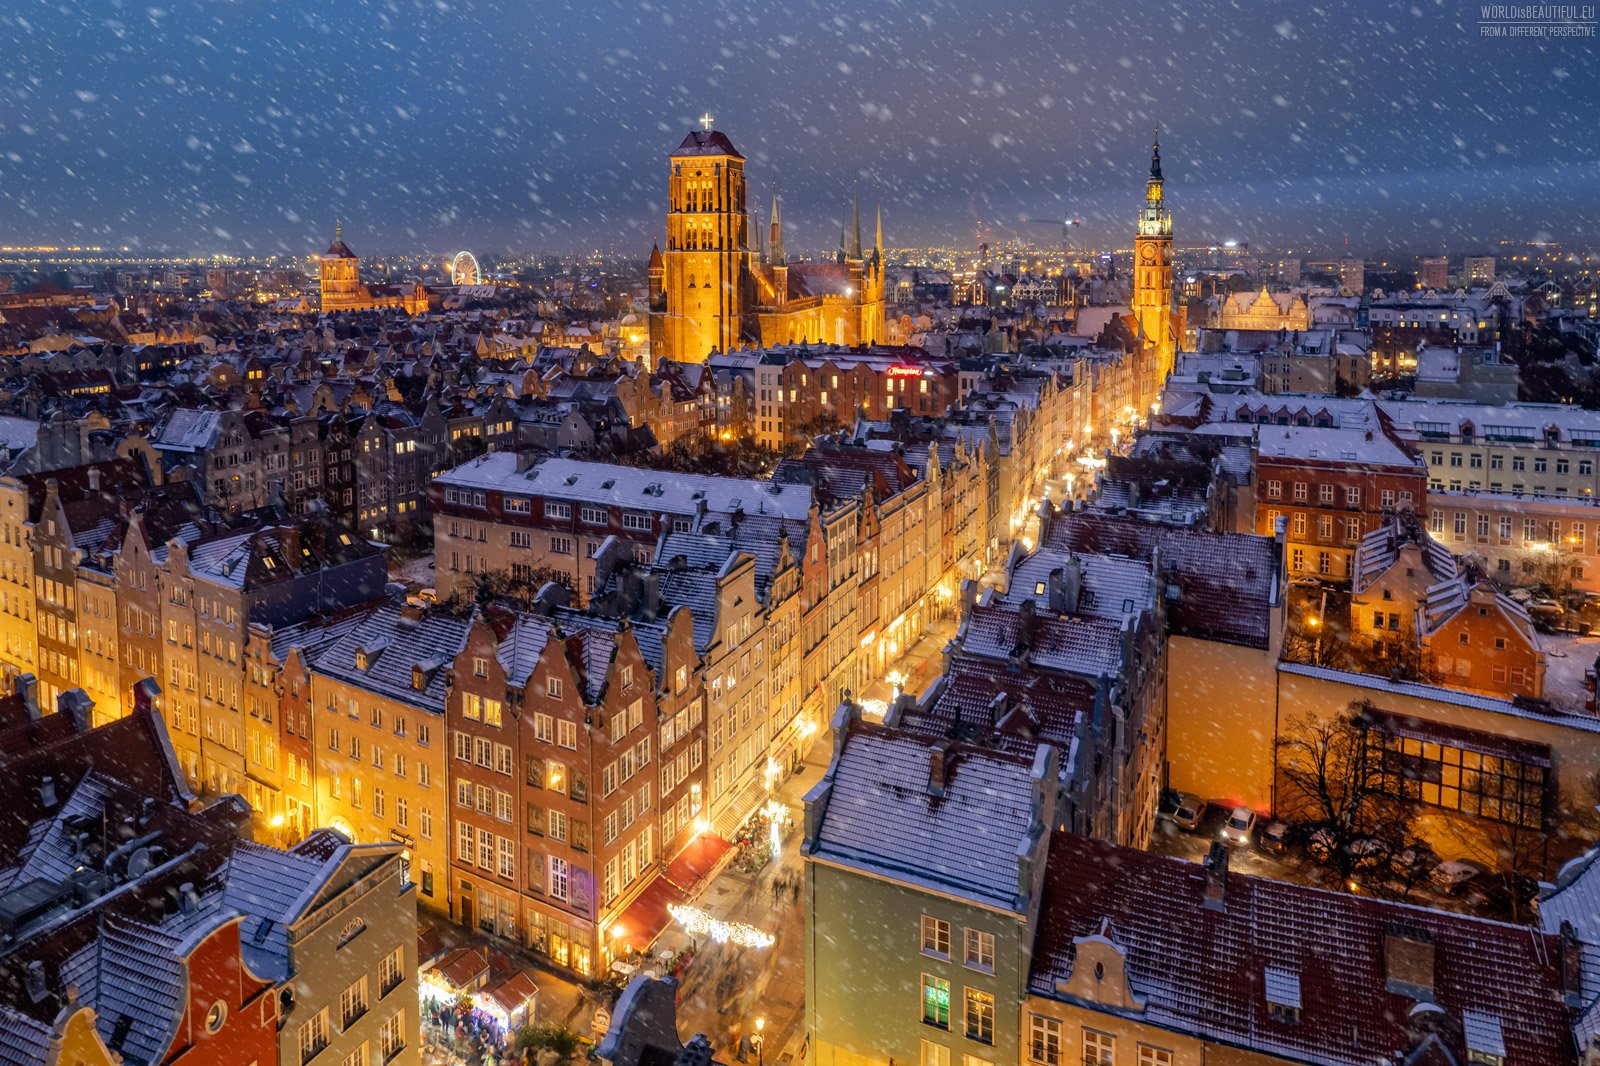 Gdansk winter atmosphere